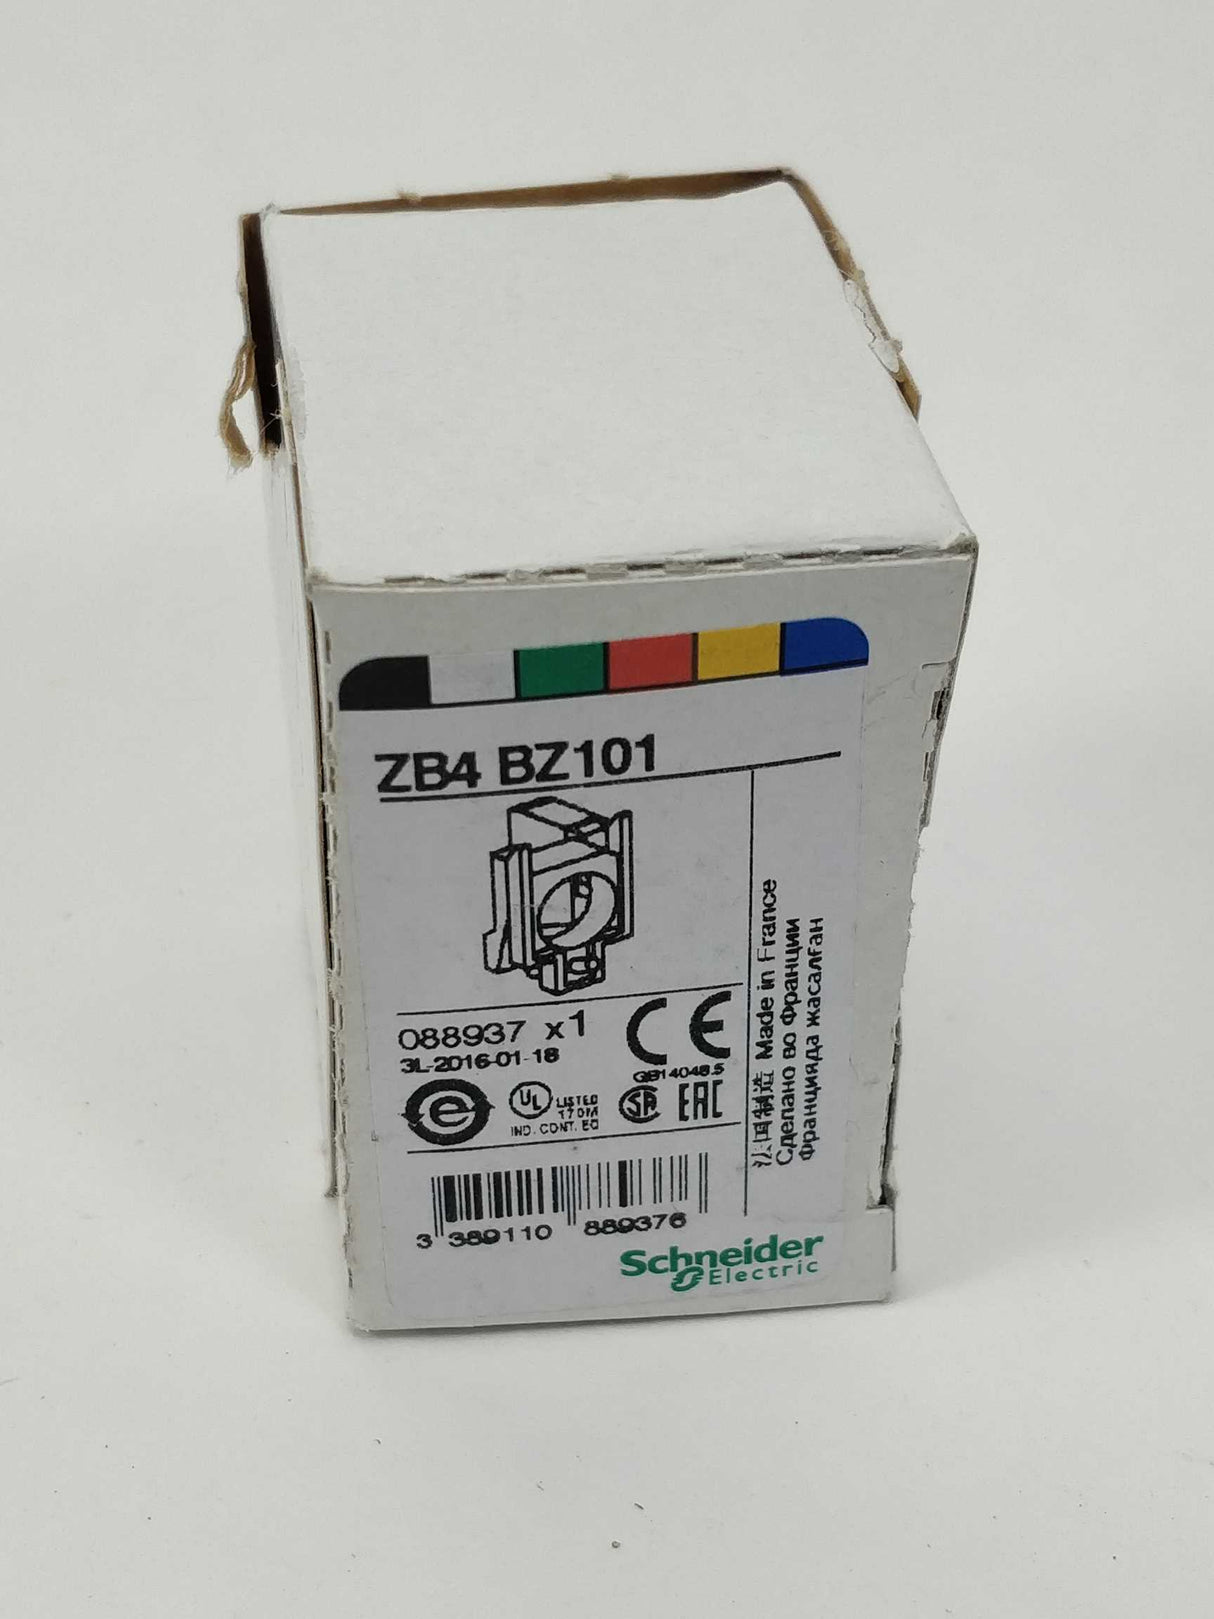 Schneider Electric ZB4 BZ101 088937 Single contact block, Harmony XB4